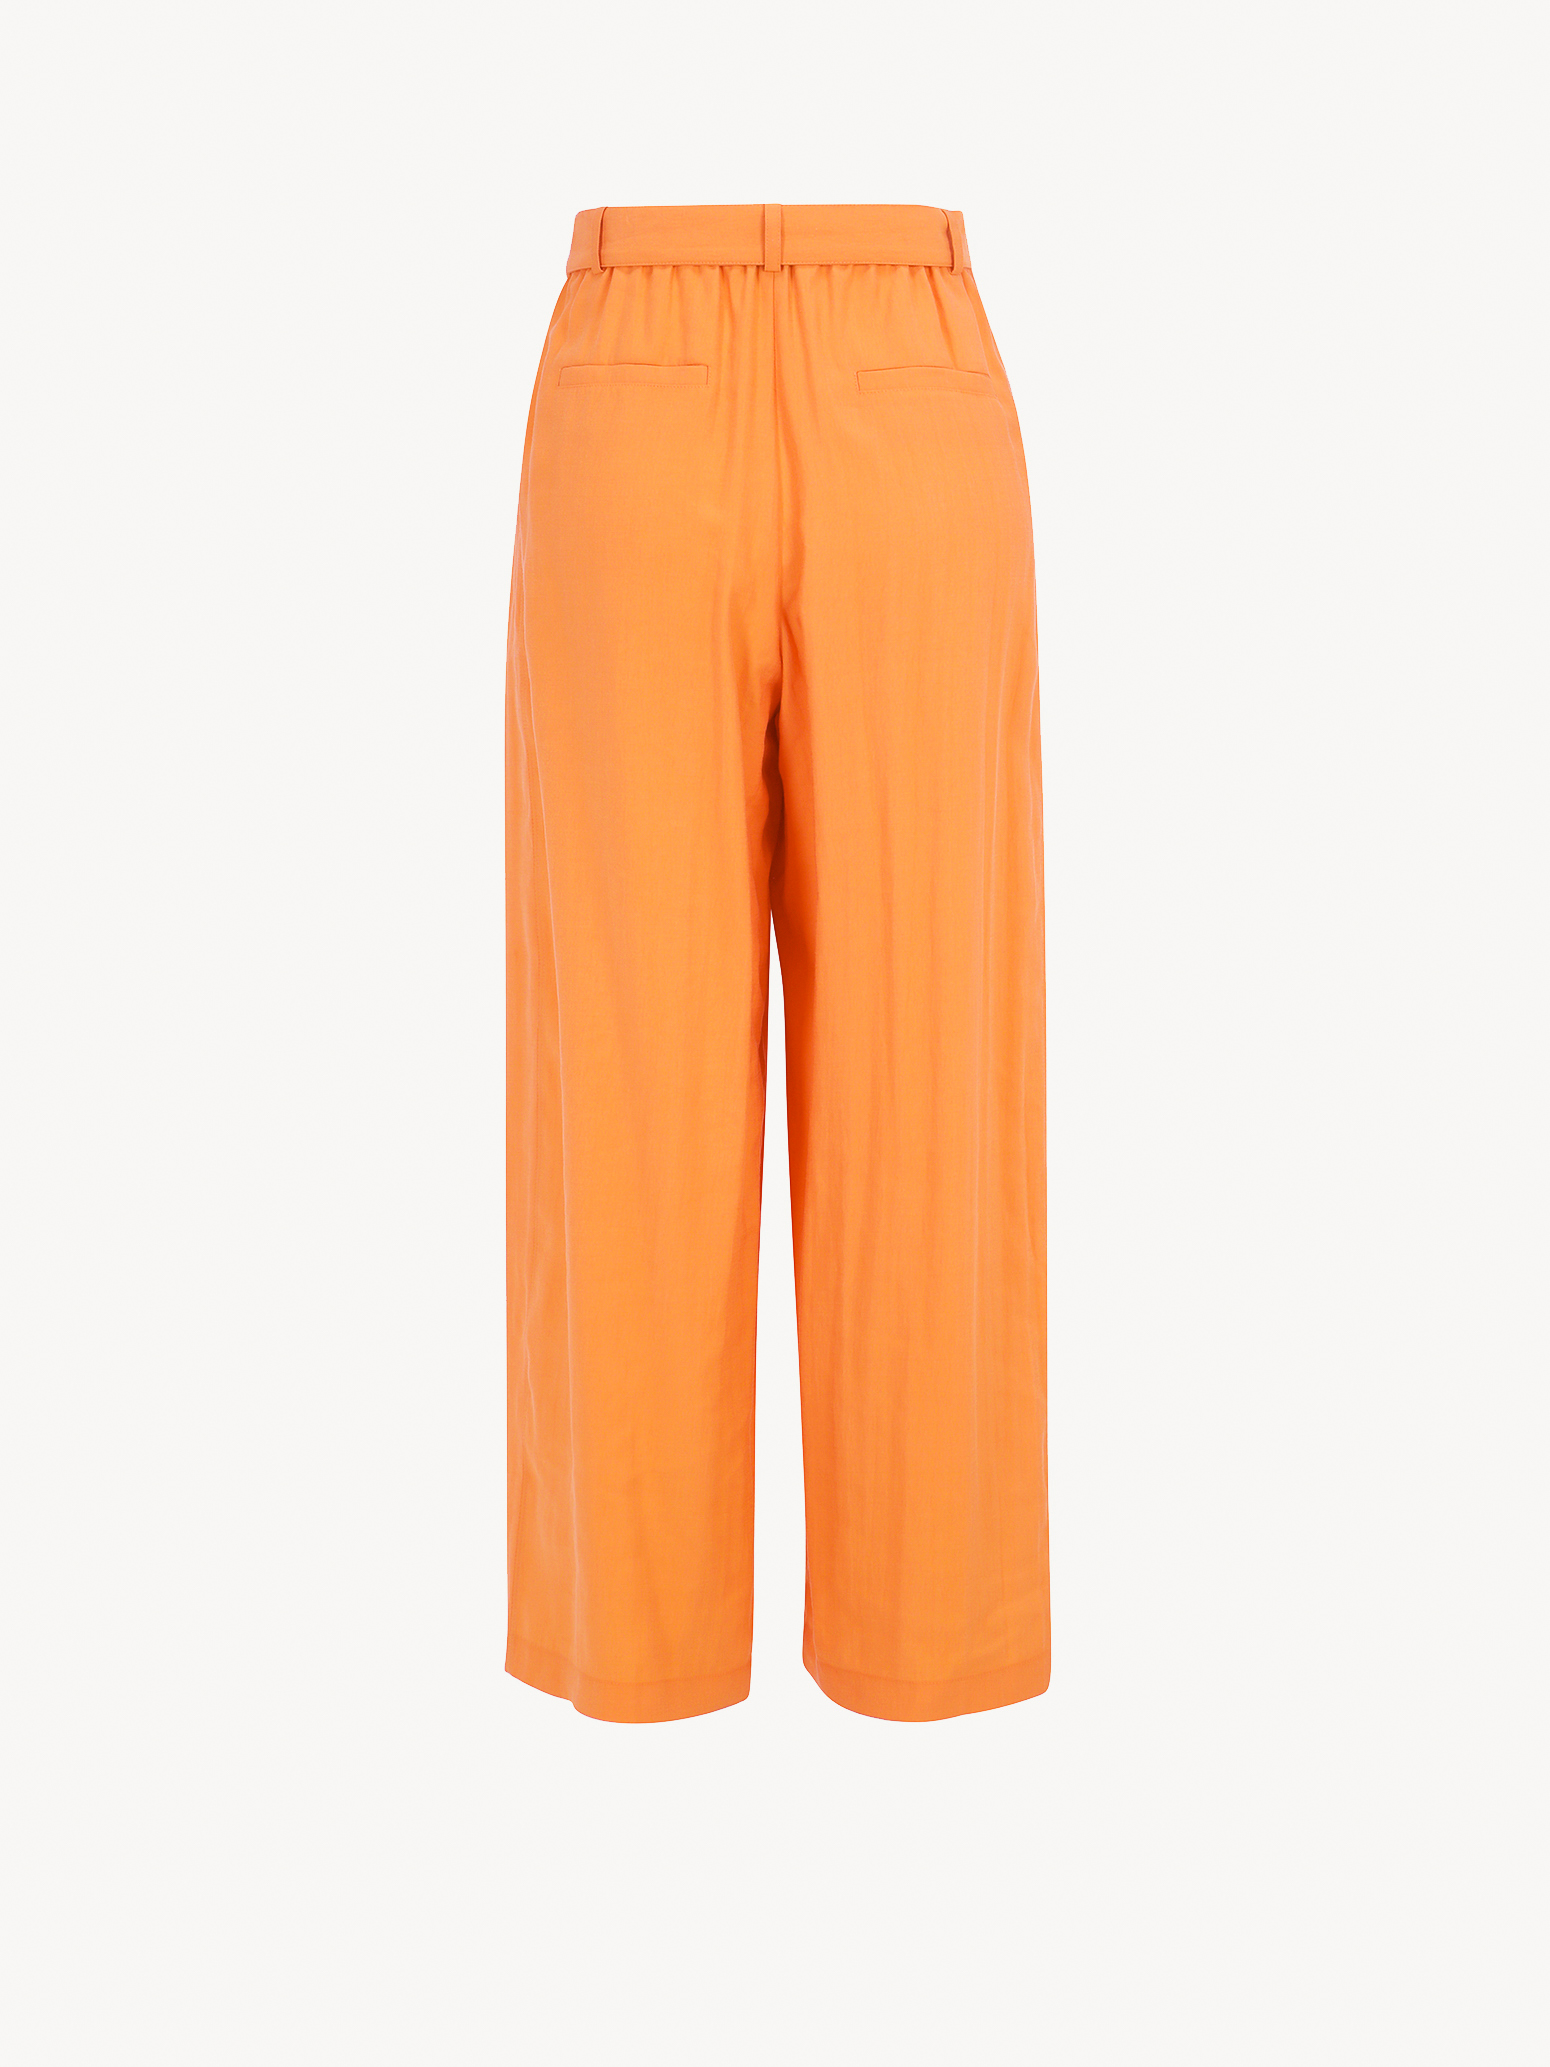 Trousers - orange, Dusty Orange, hi-res